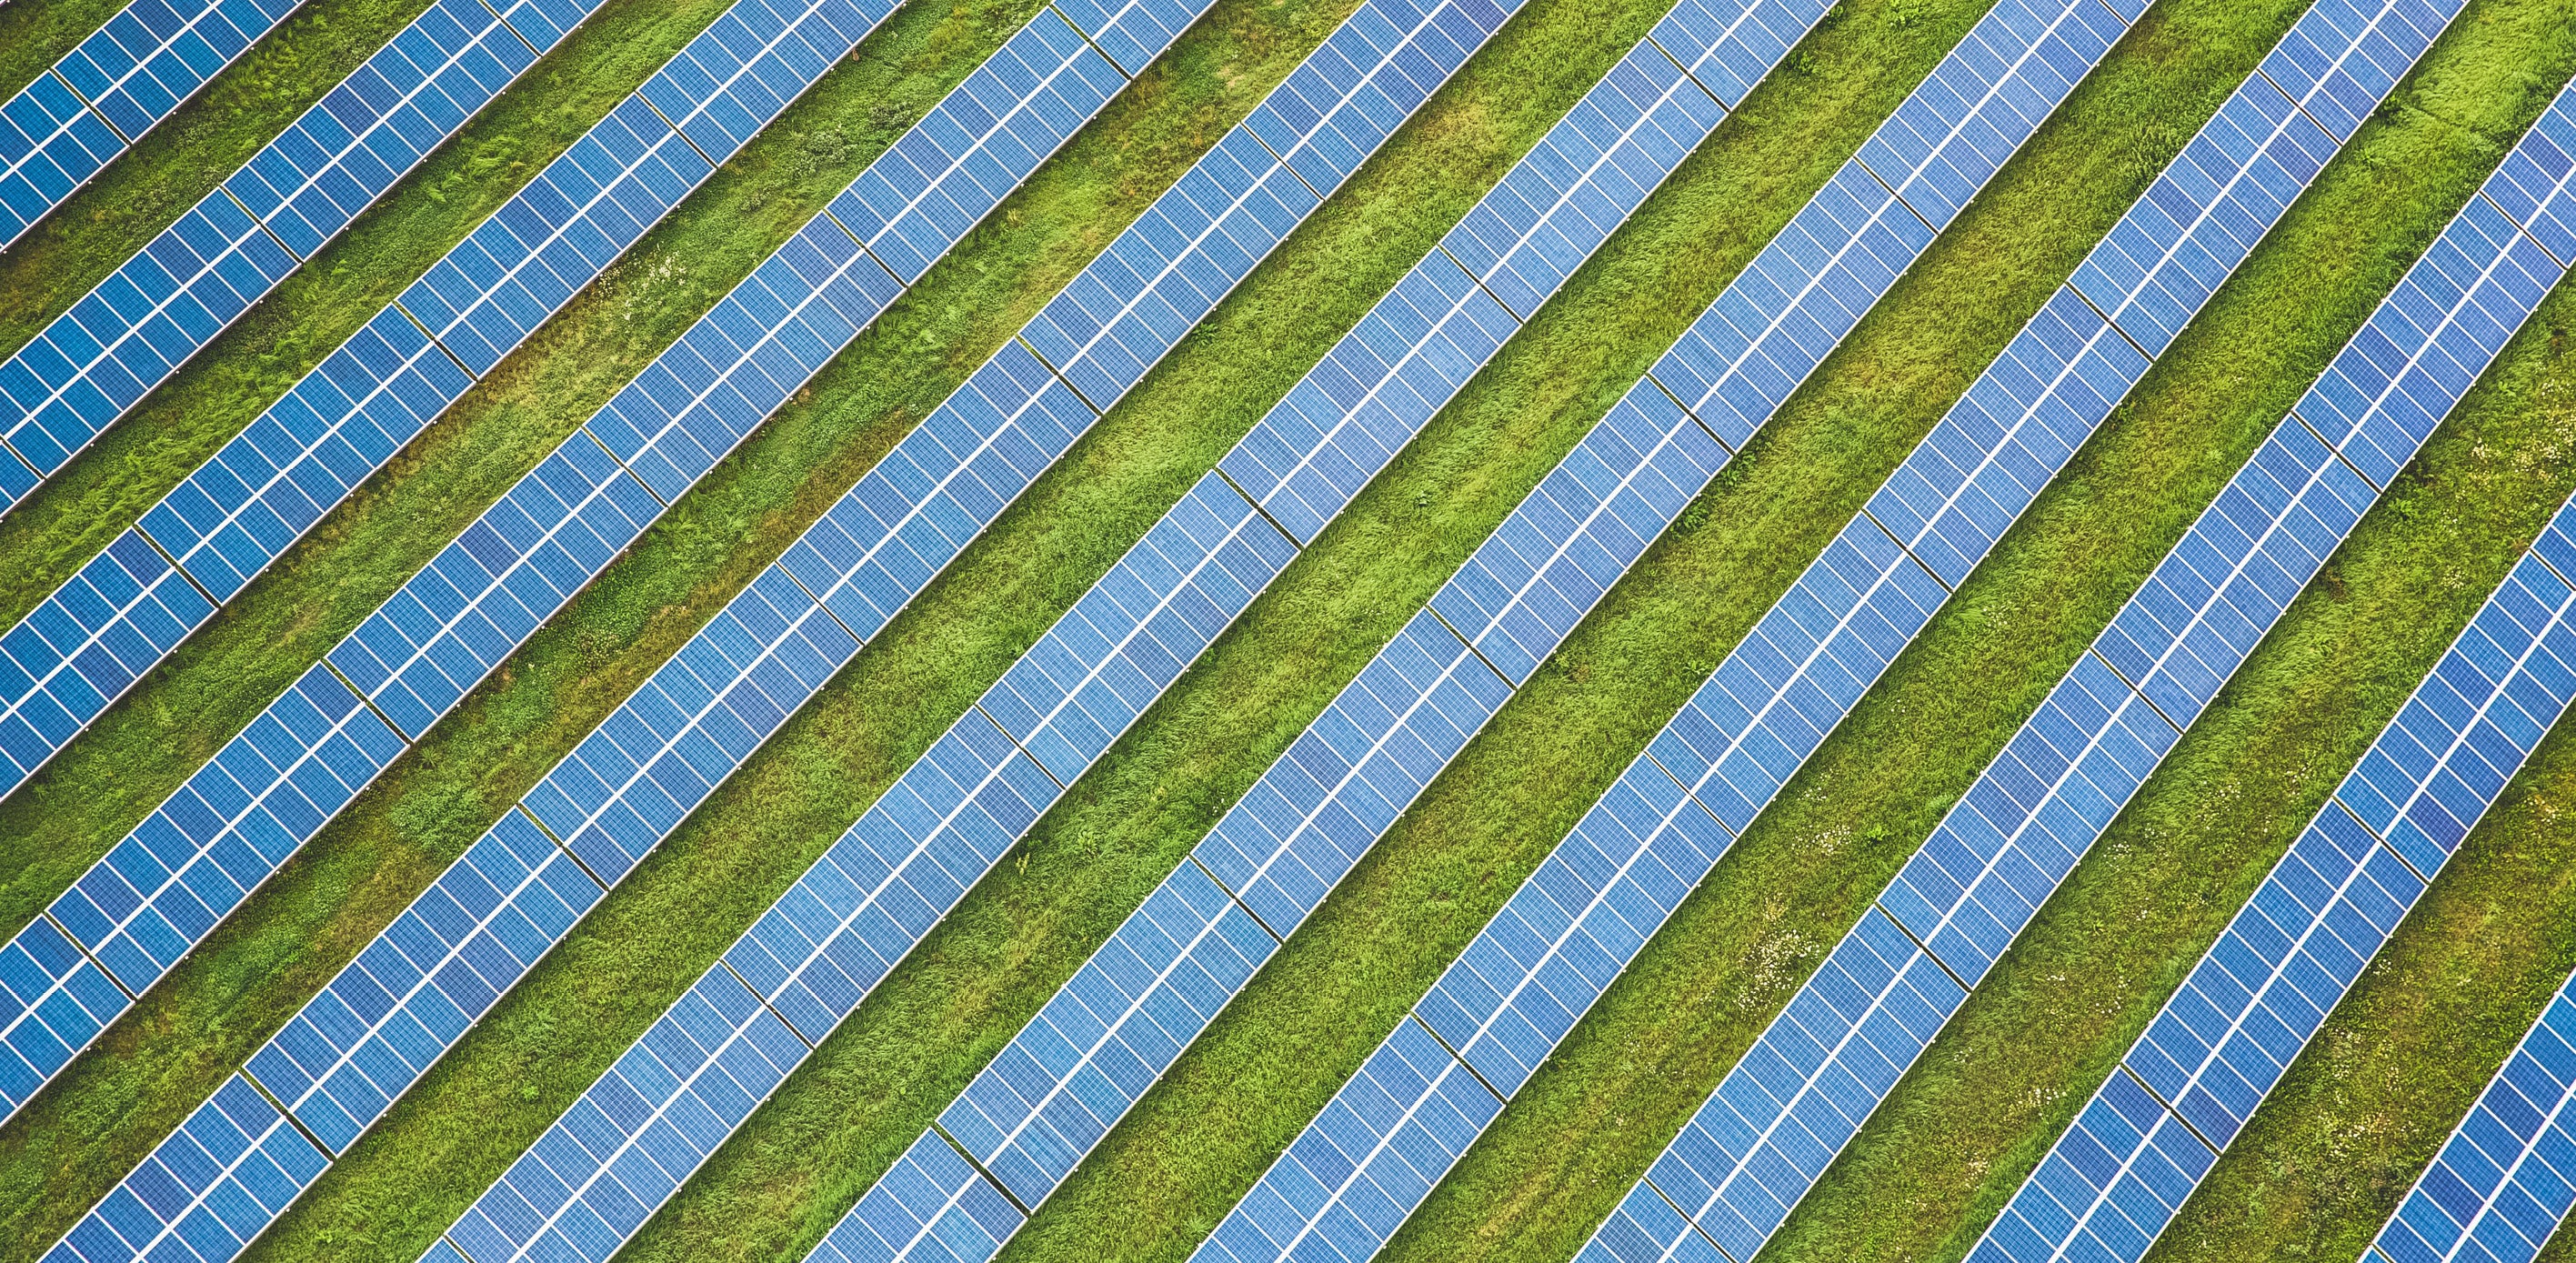 Renewable Energy Source: Solar Power